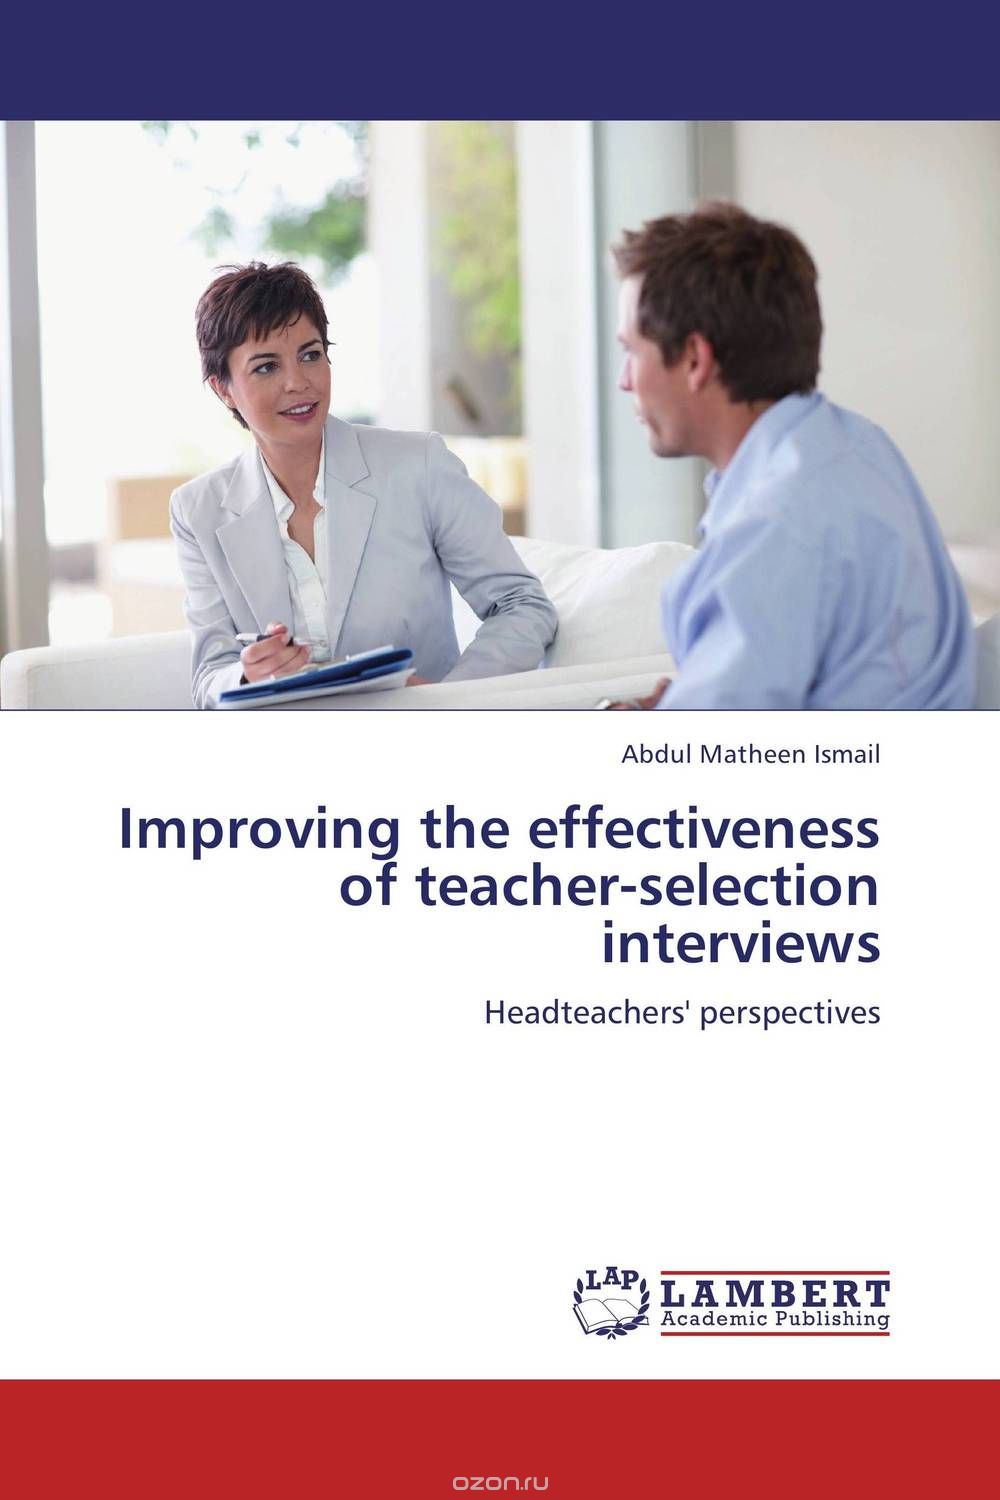 Скачать книгу "Improving the effectiveness of teacher-selection interviews"